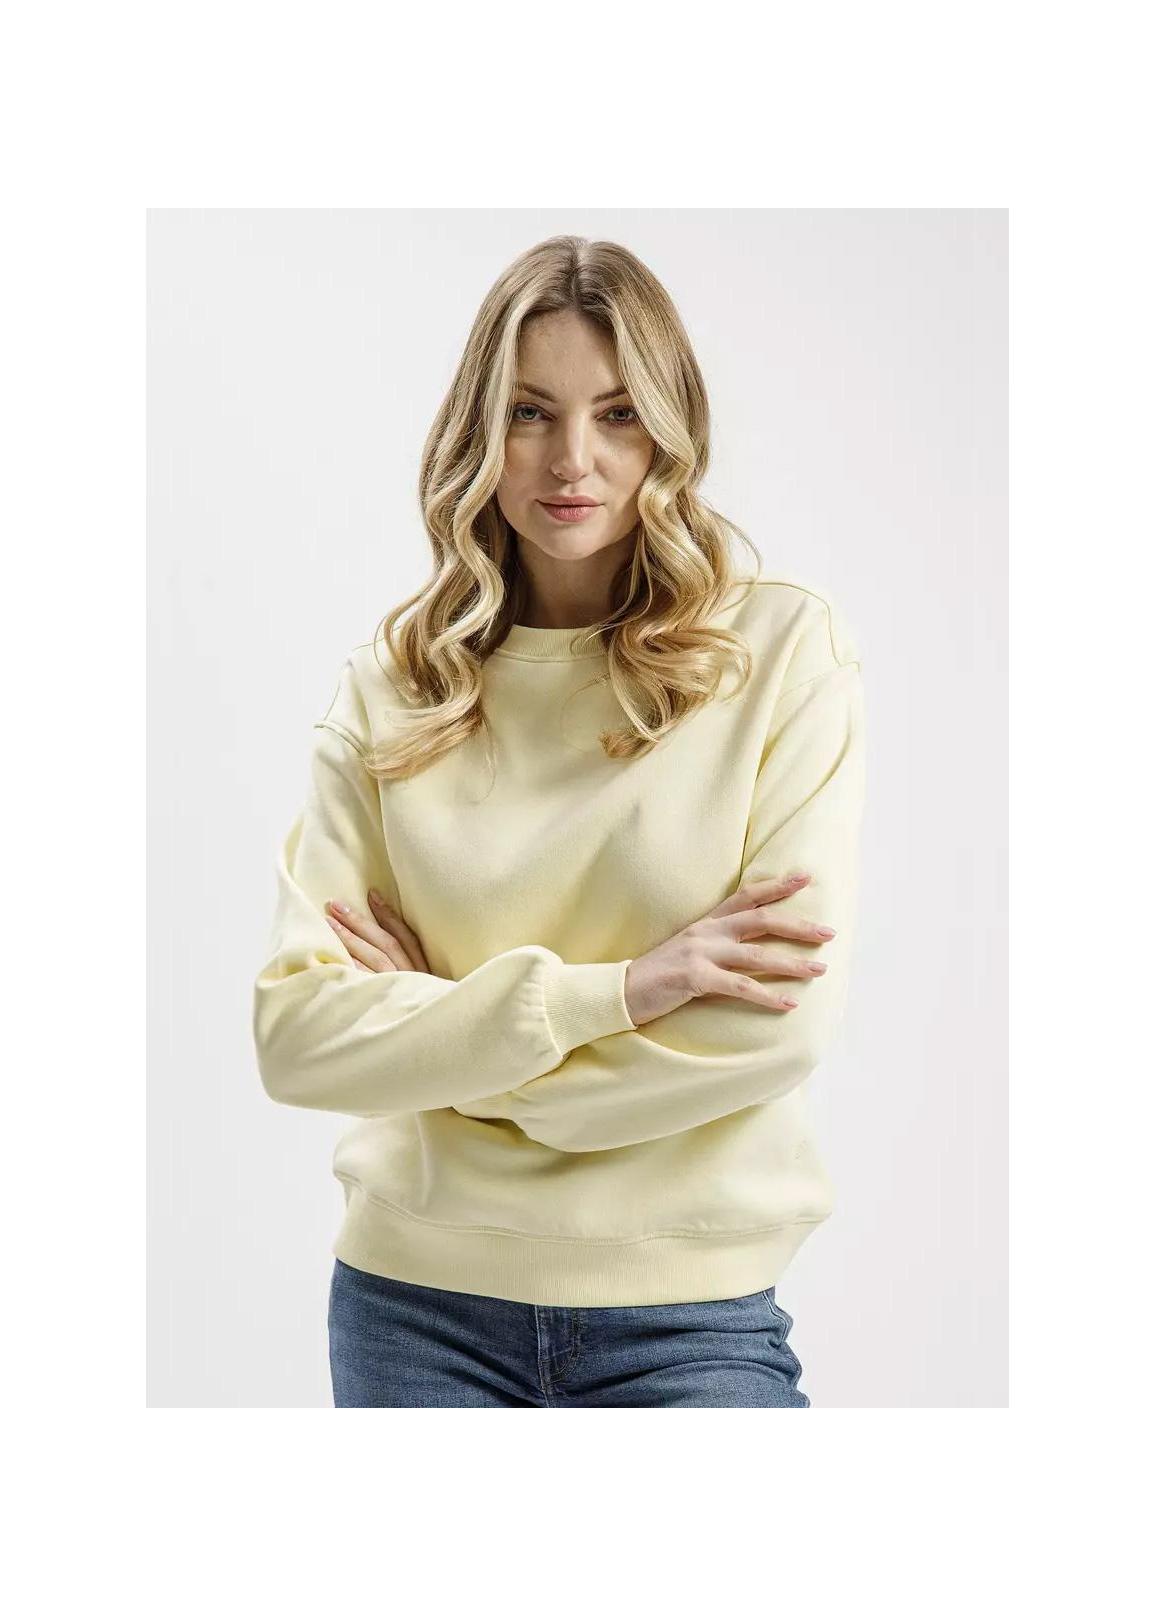 Cross Jeans® Sweatshirt - Light Yellow (011)